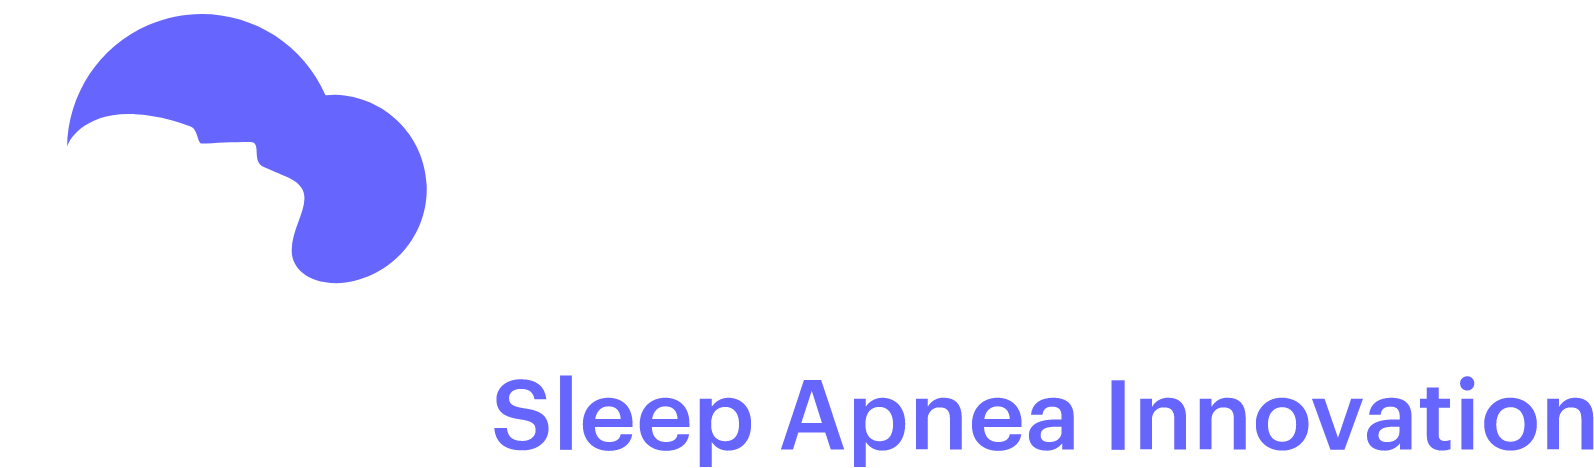 Inspire Medical Systems
 logo large for dark backgrounds (transparent PNG)